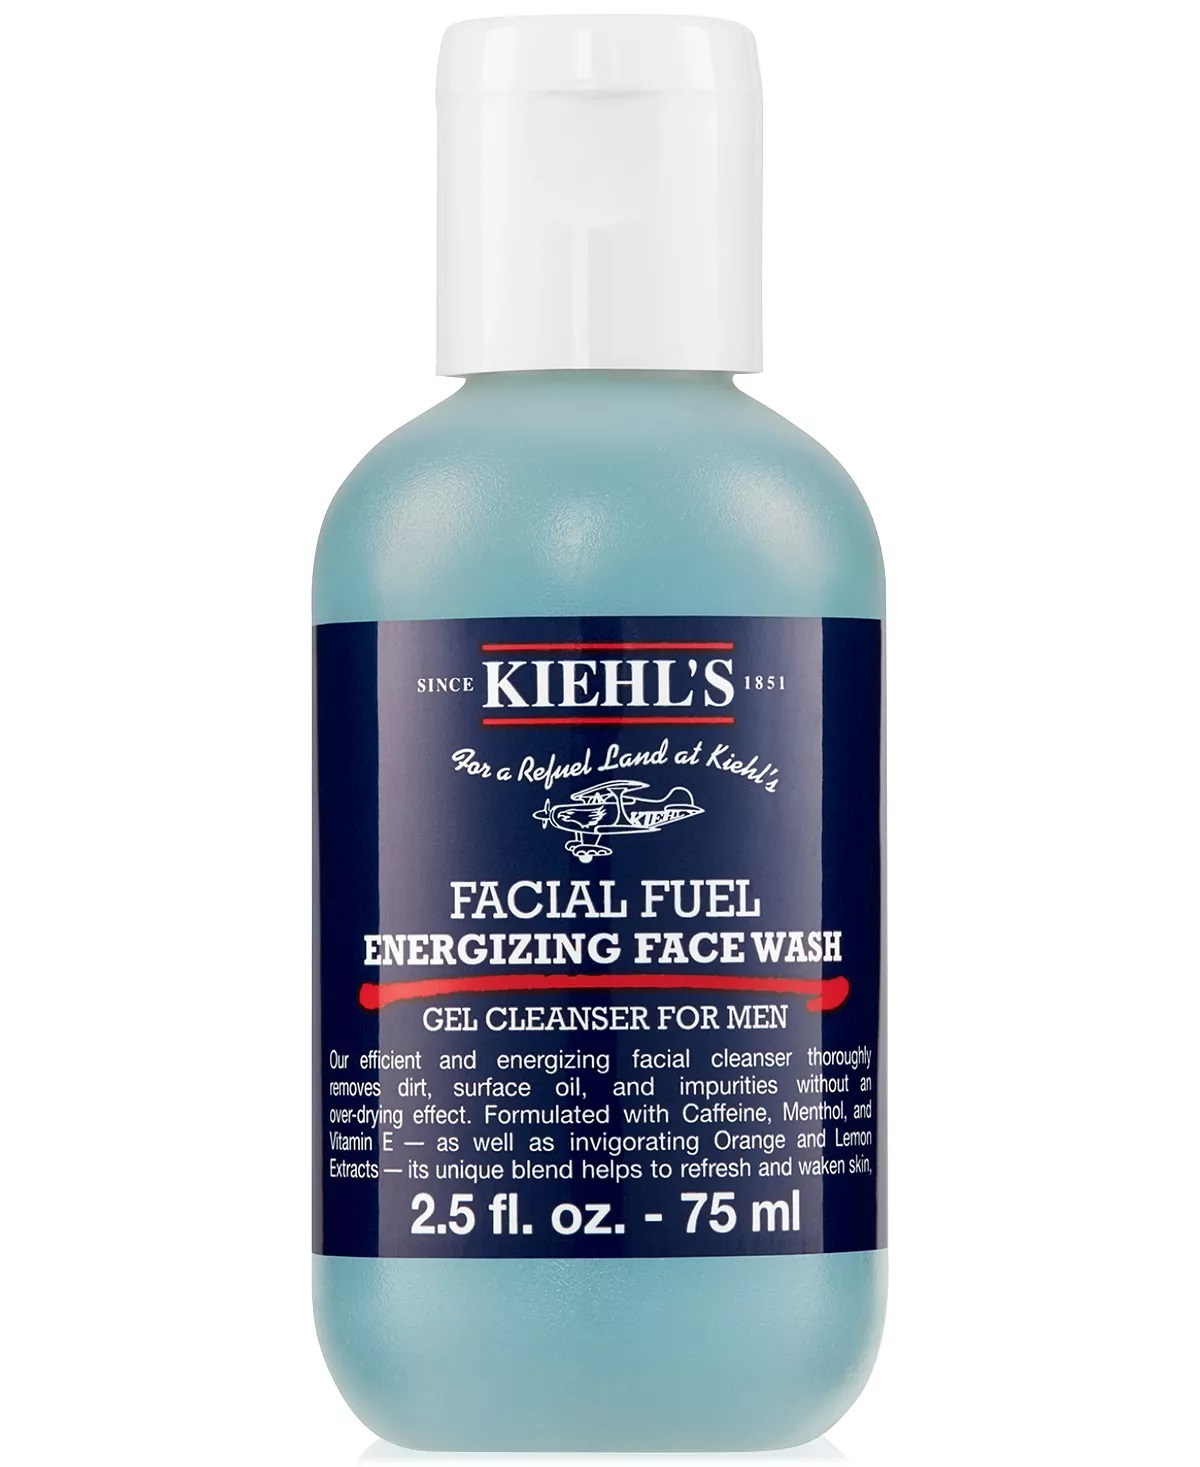 KIEHL'S SINCE 1851 Facial Fuel Energizing Face Wash, 2.5-oz.